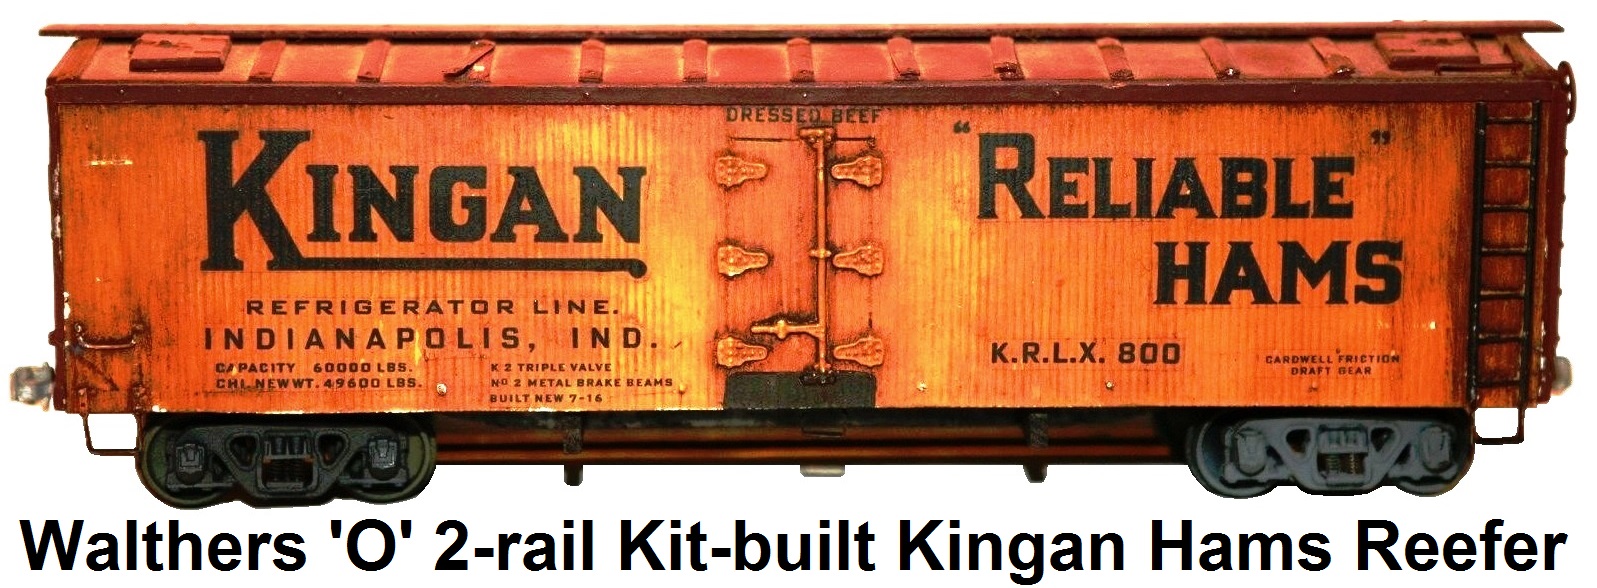 Walthers 'O' scale 2-rail Kit-built Kingan Reliable Hams Reefer